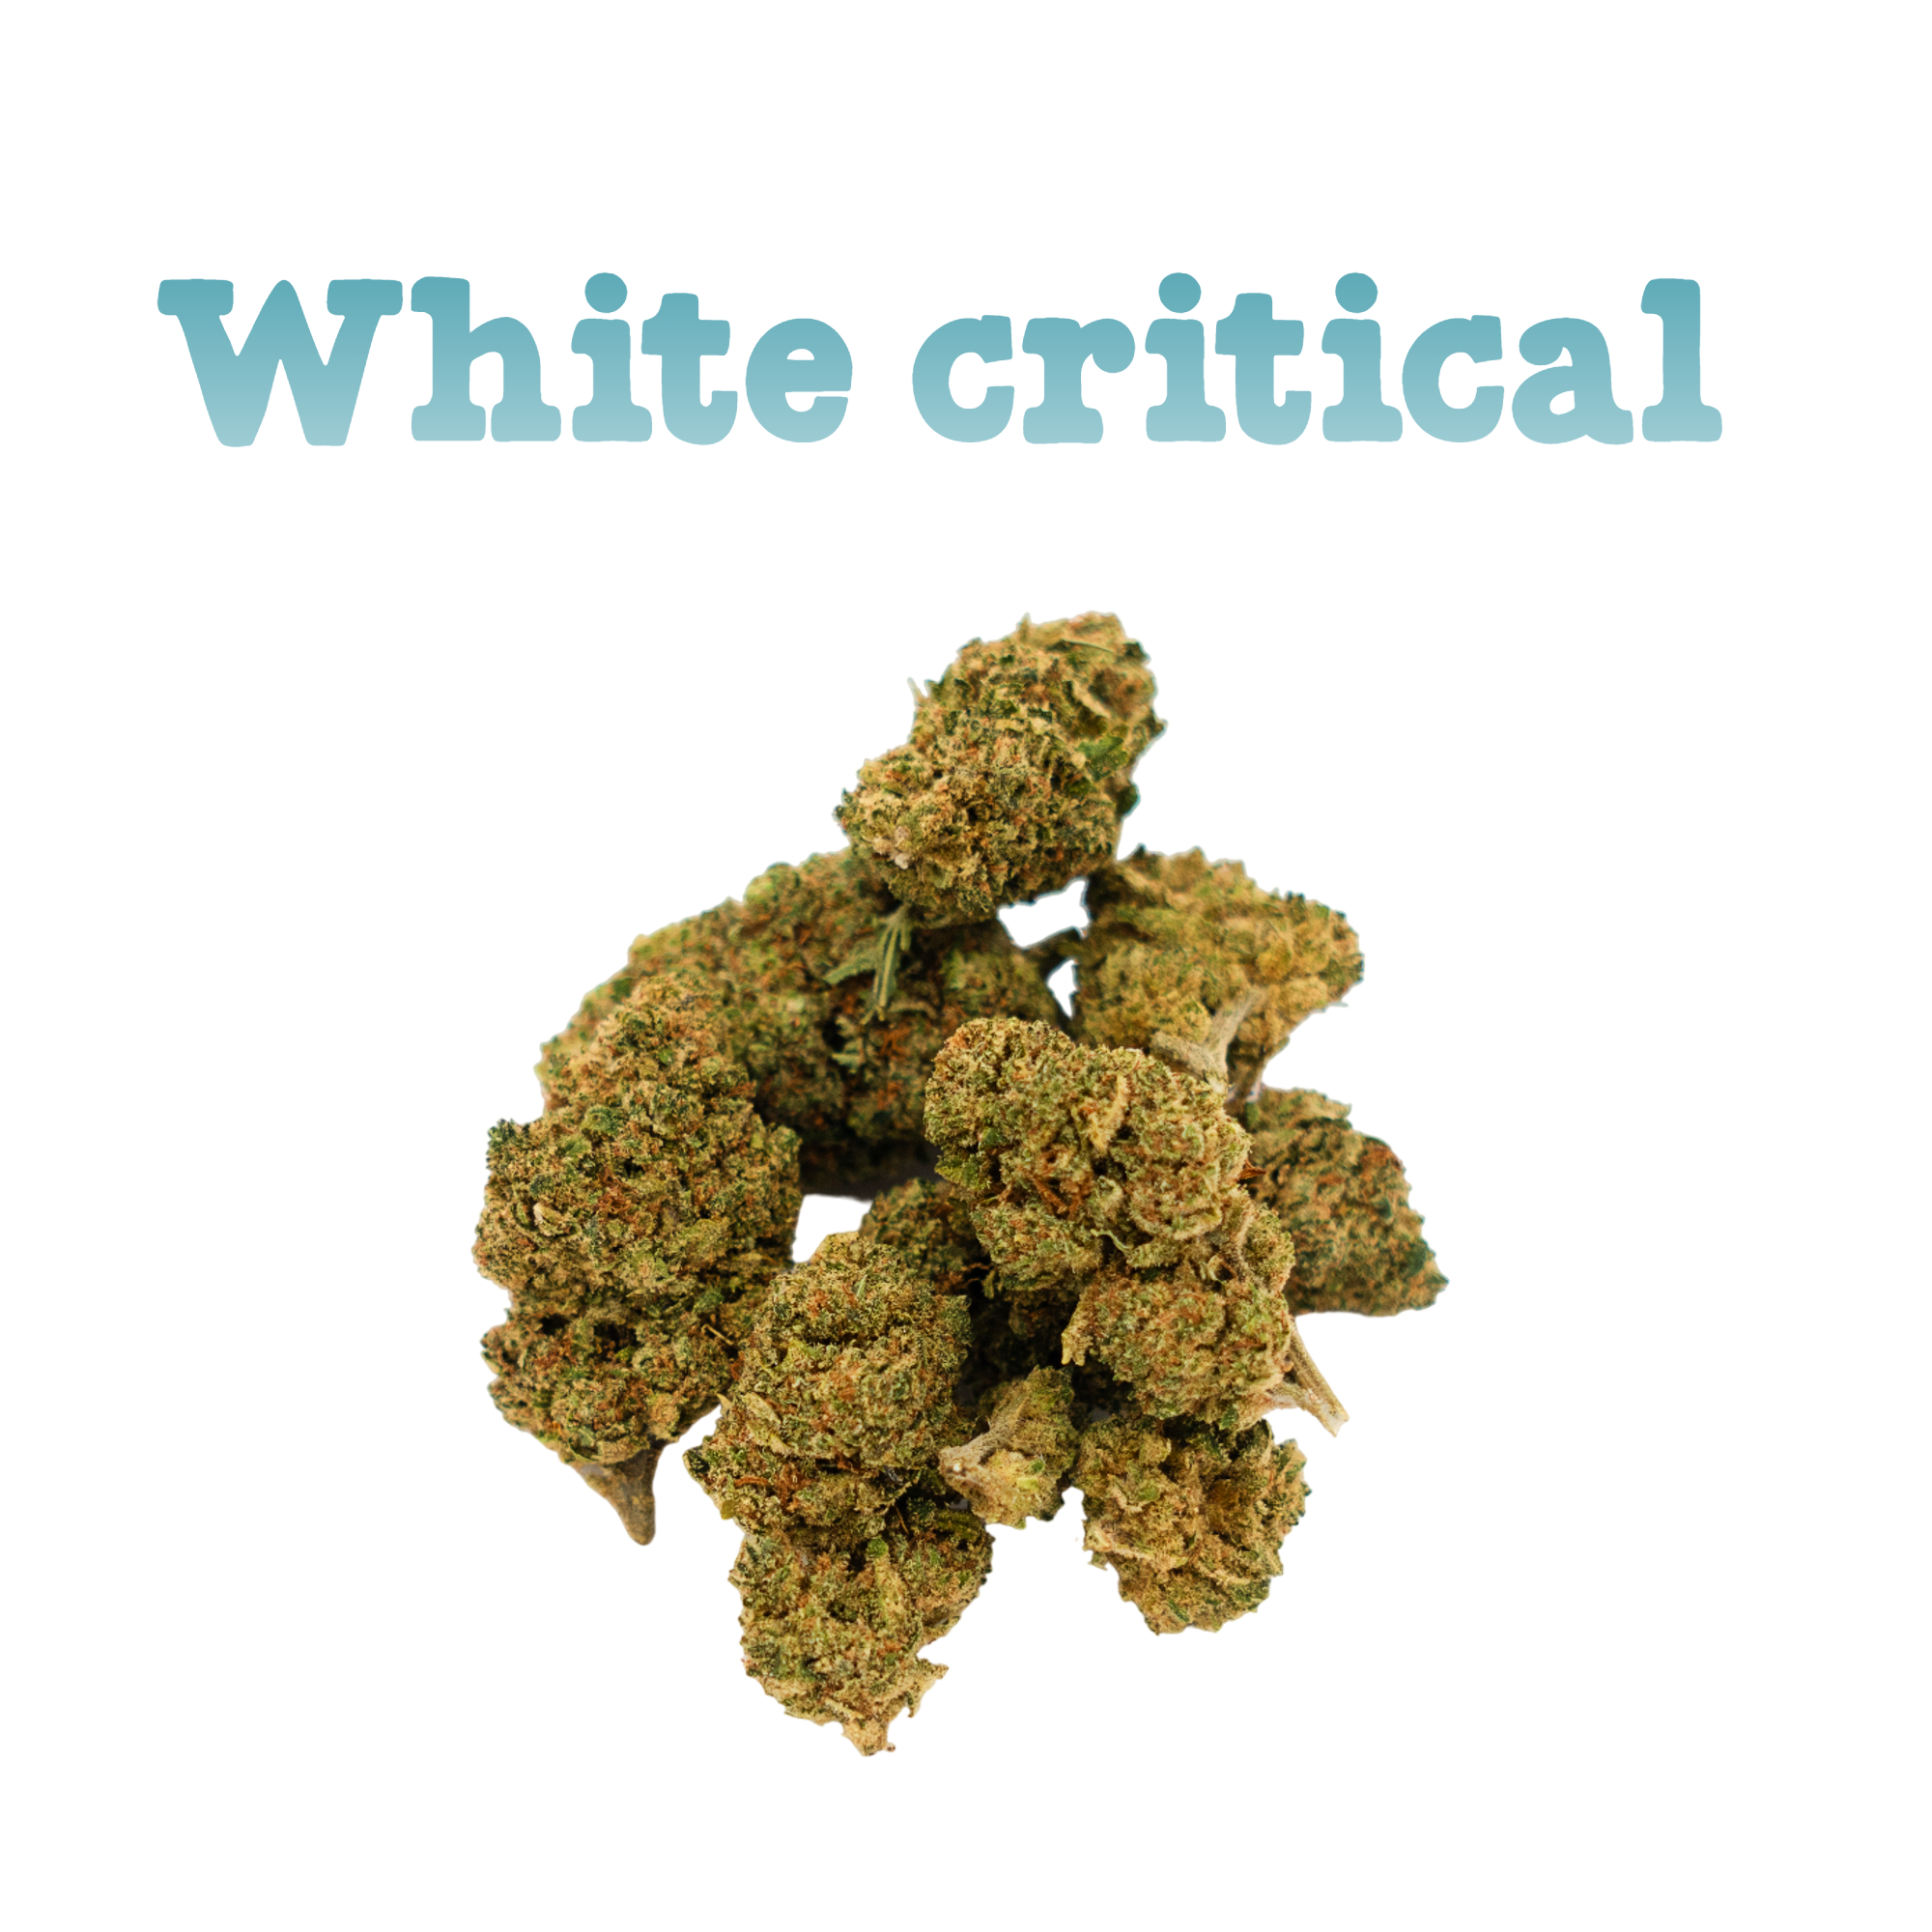 White critical - fleur de CBD